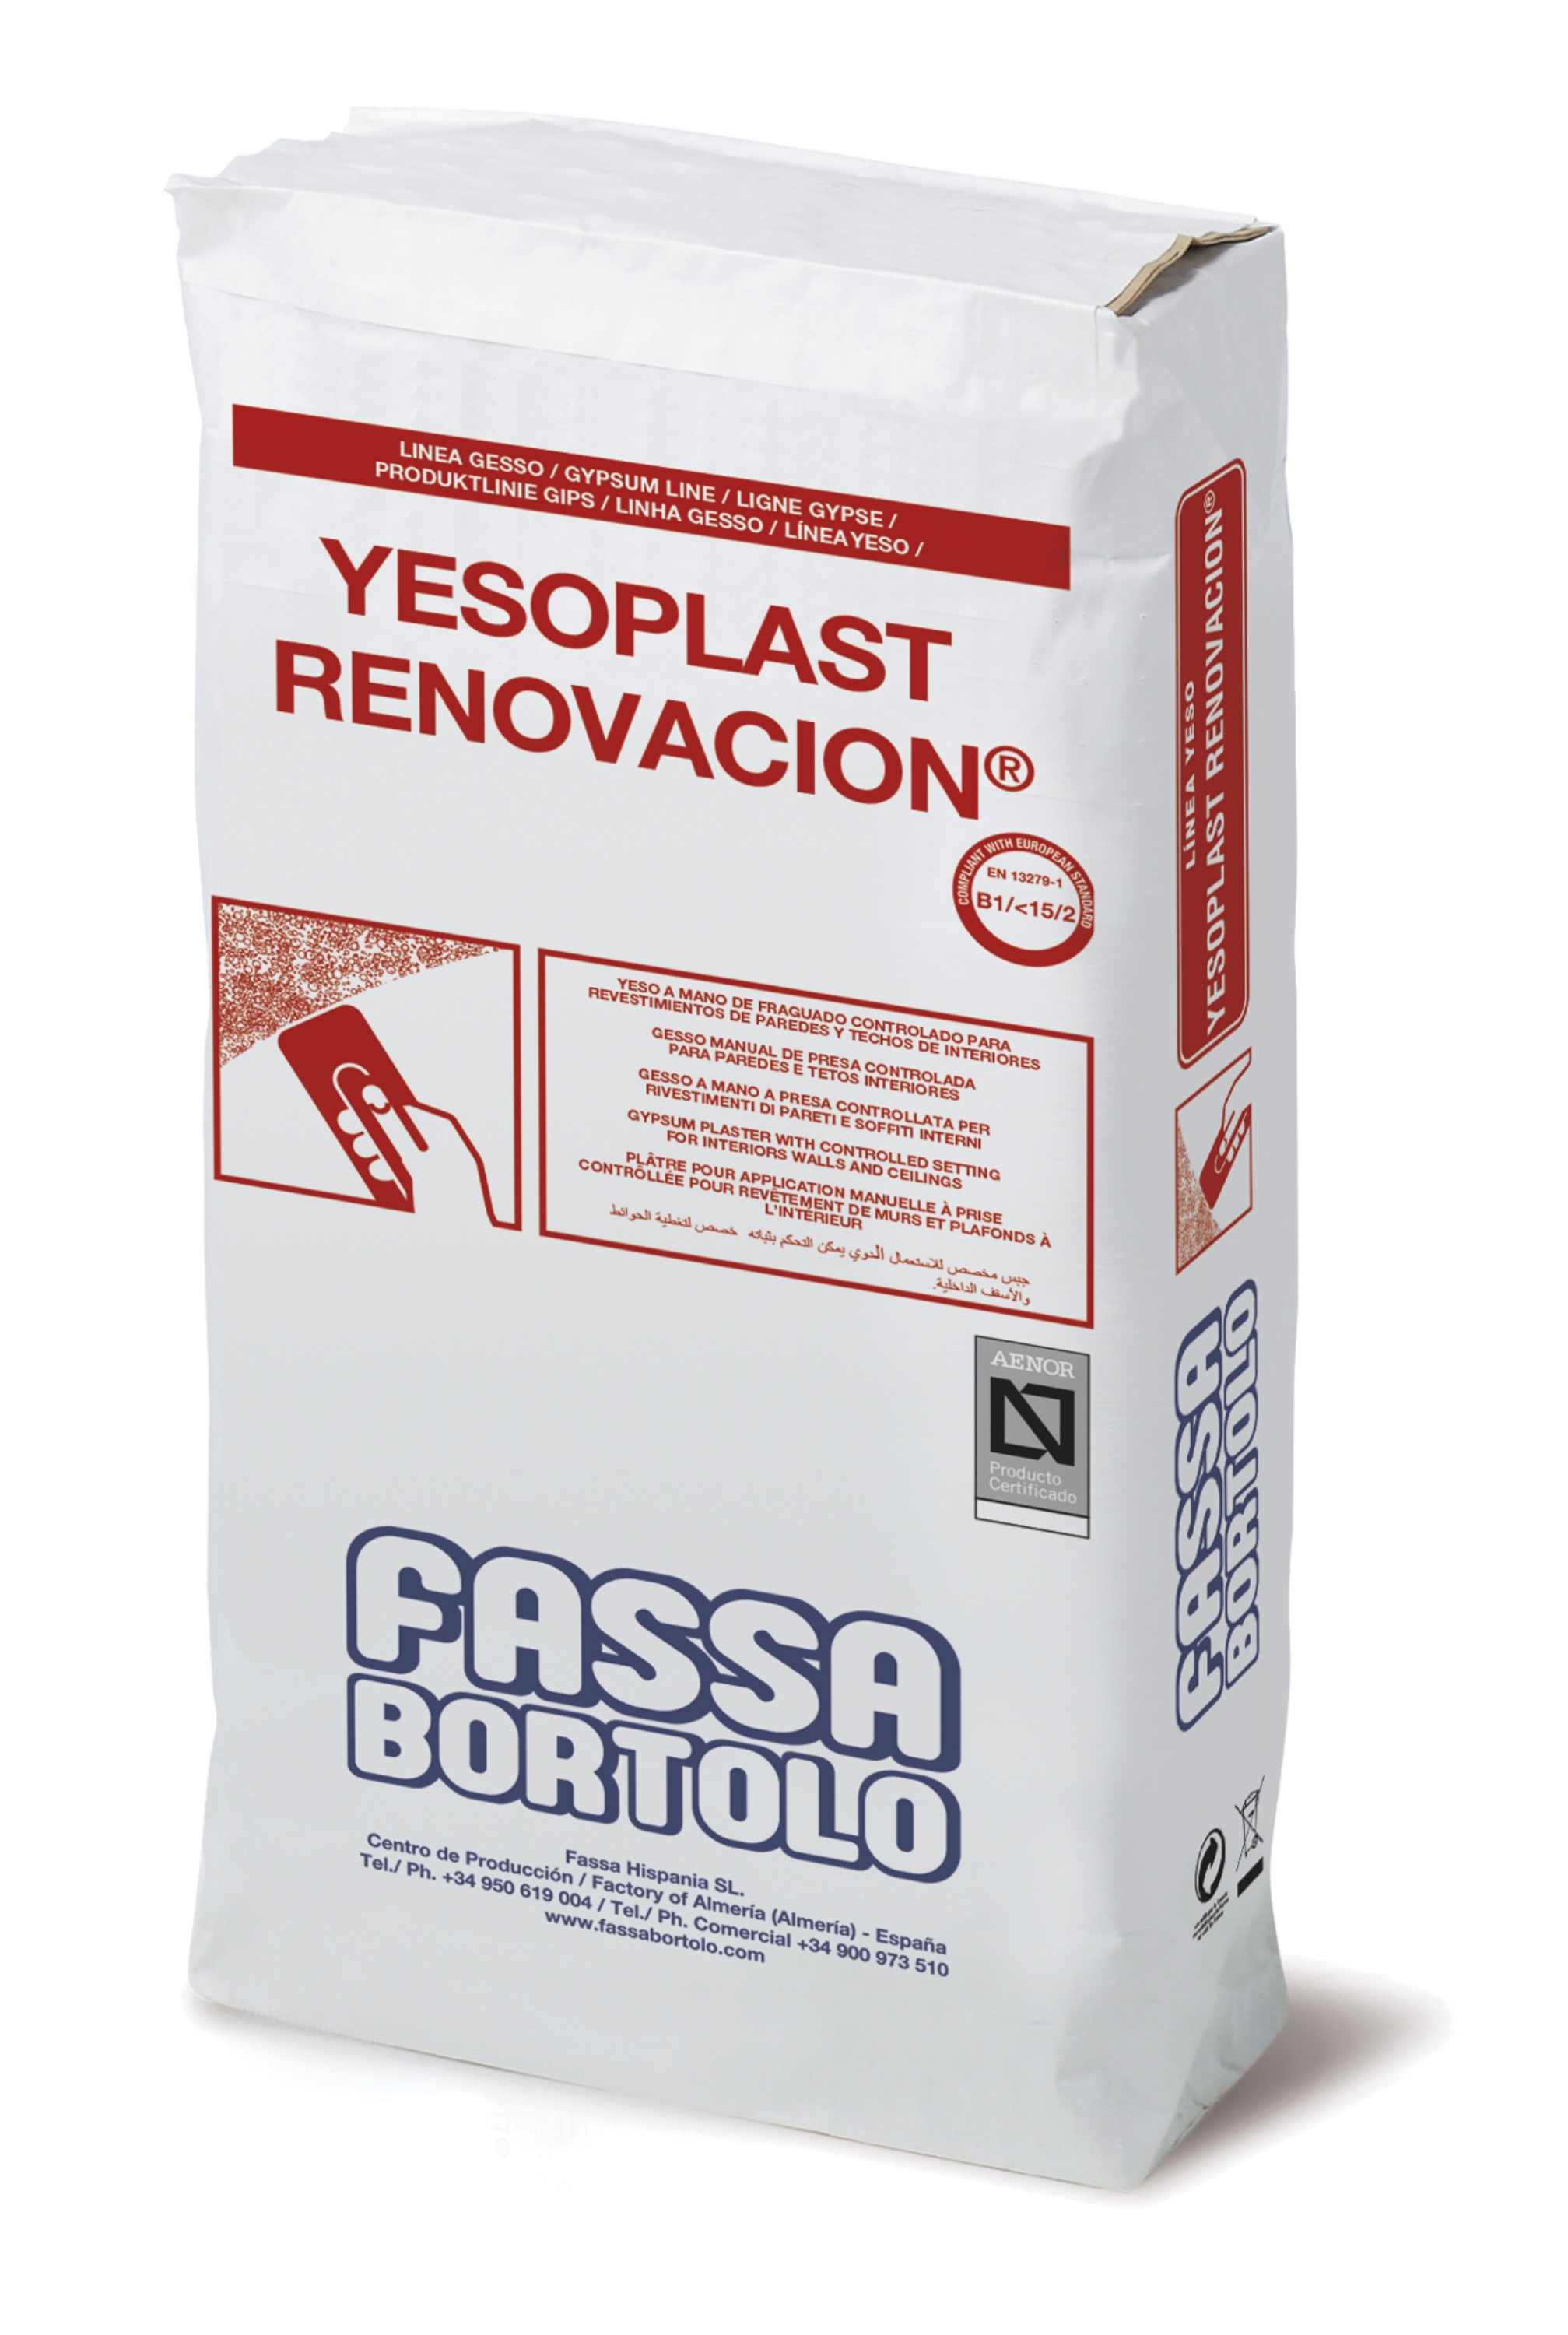 Imagen de Yesoplast renovación 14kg. PASTA PARA QUITAR EL GOTELÉ.